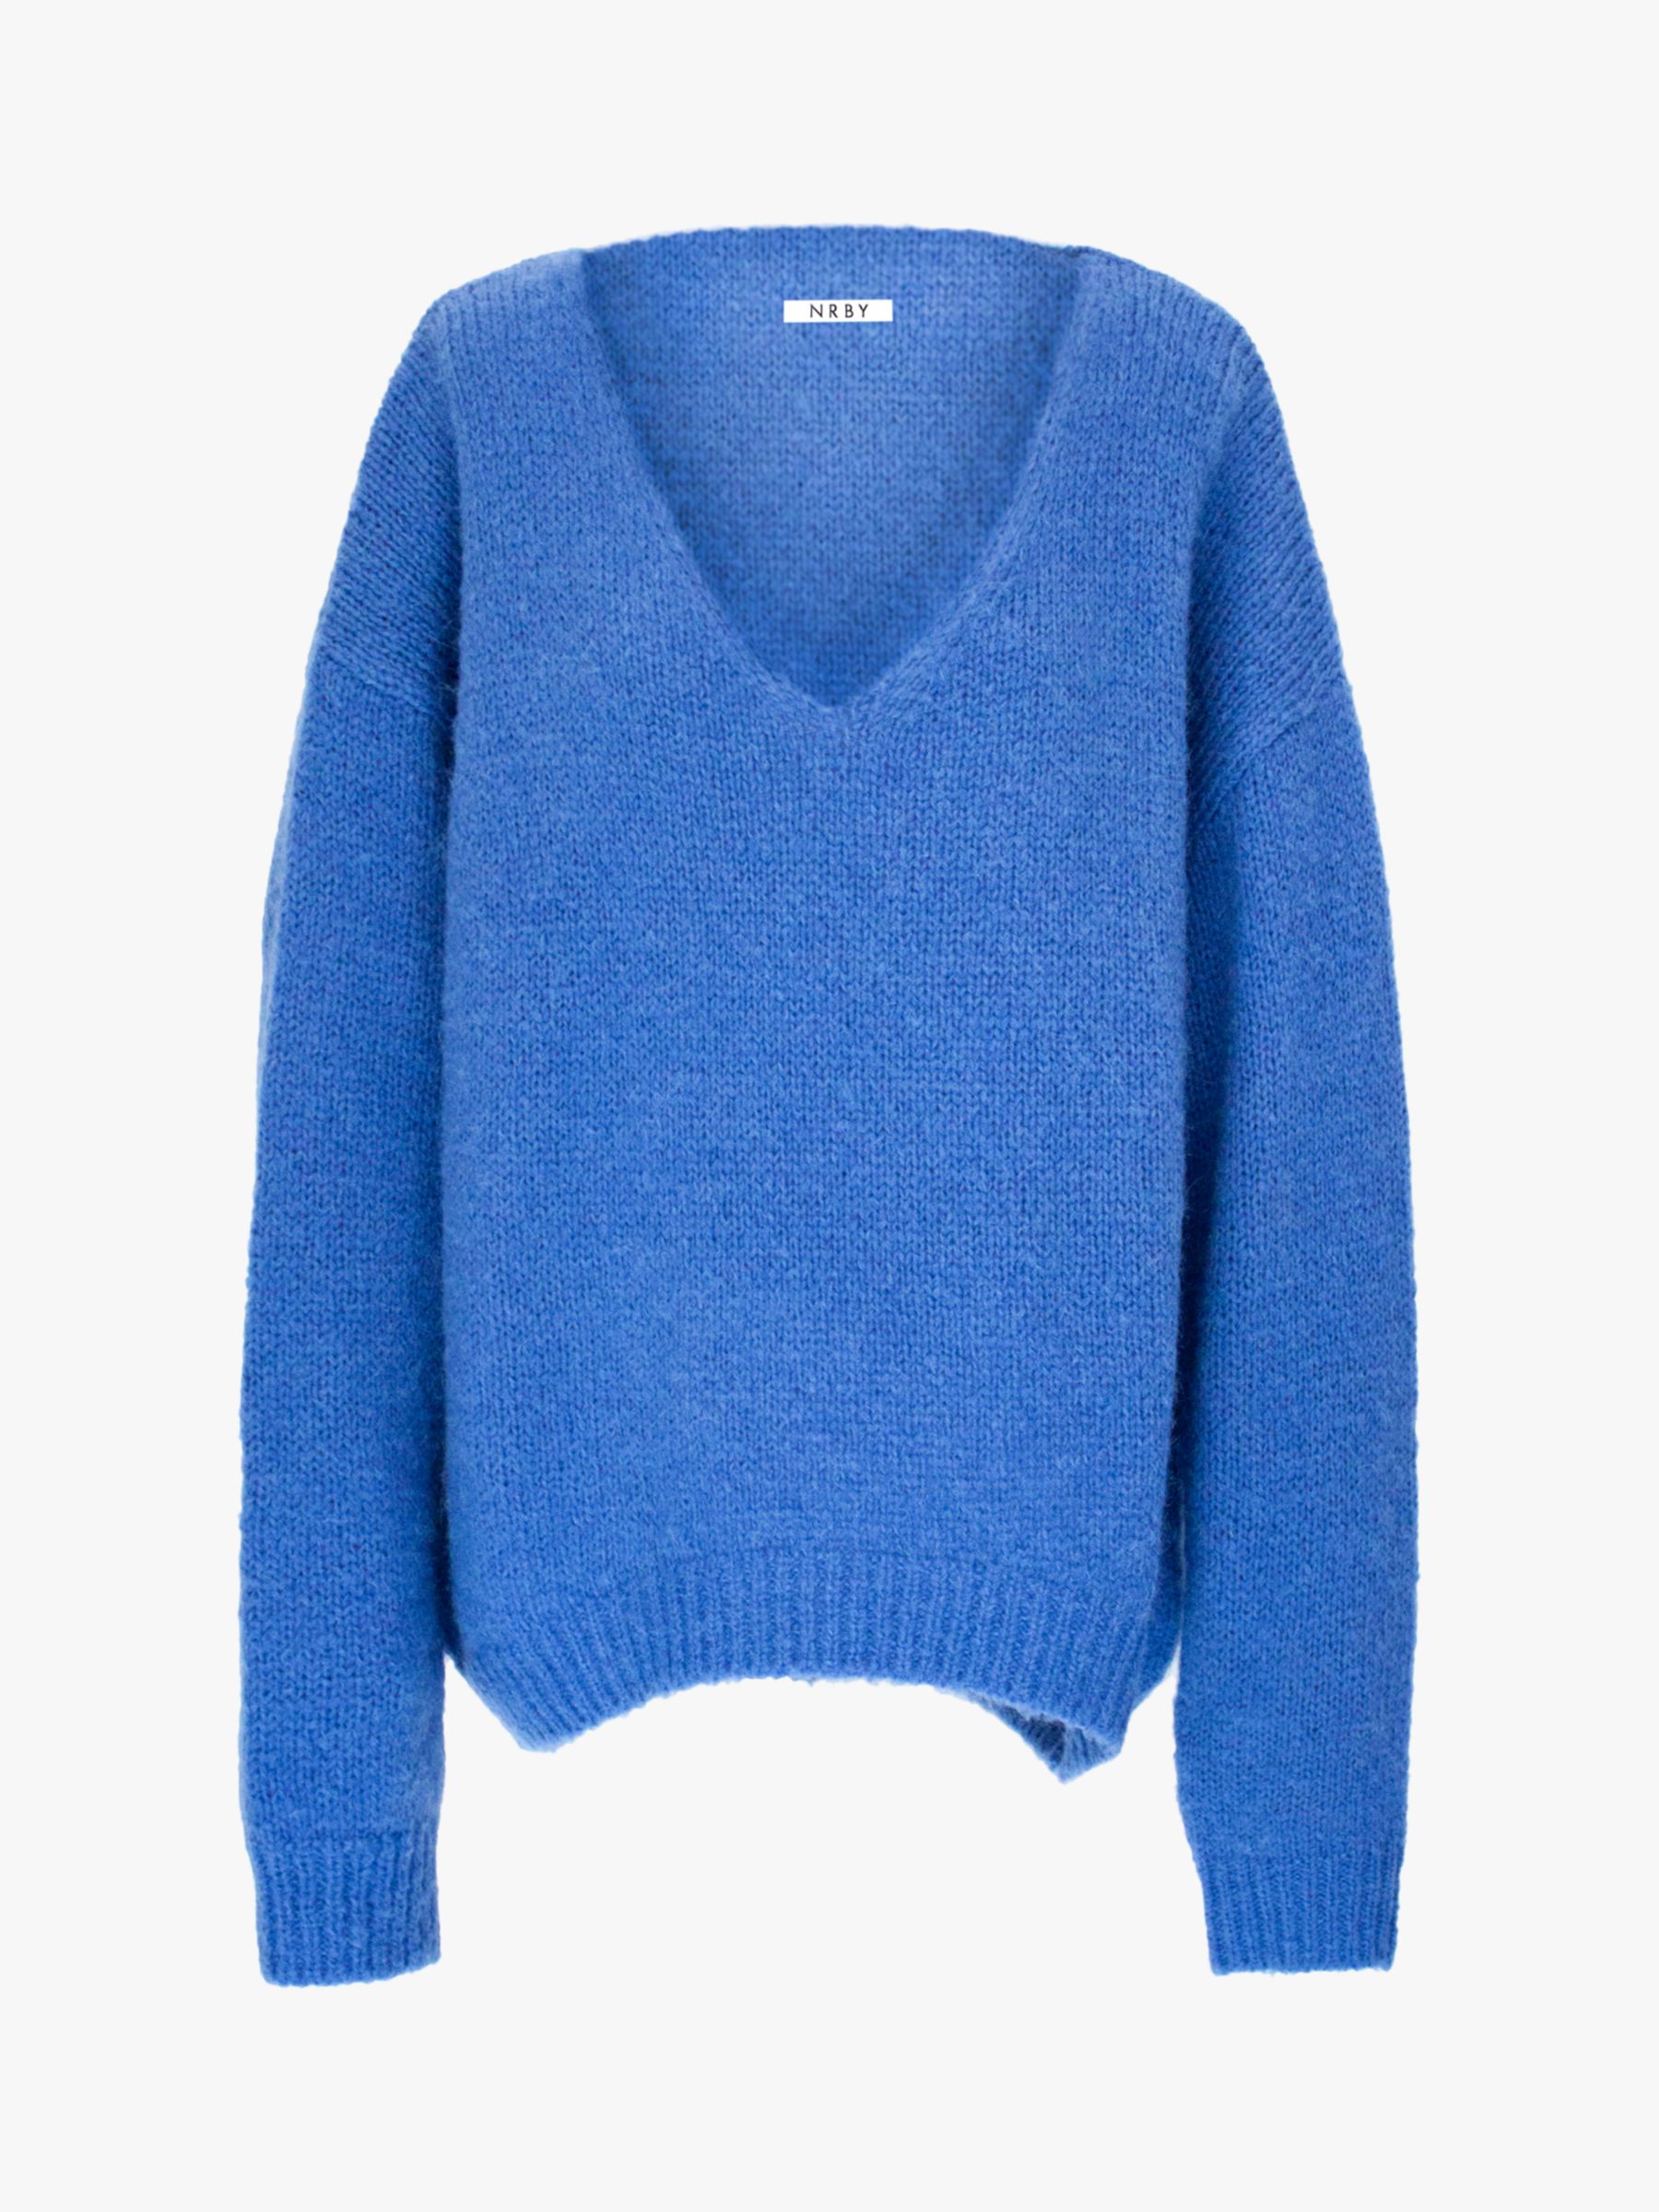 NRBY Millie Chunky V-Neck Knit Sweater, Cobalt Blue at John Lewis ...